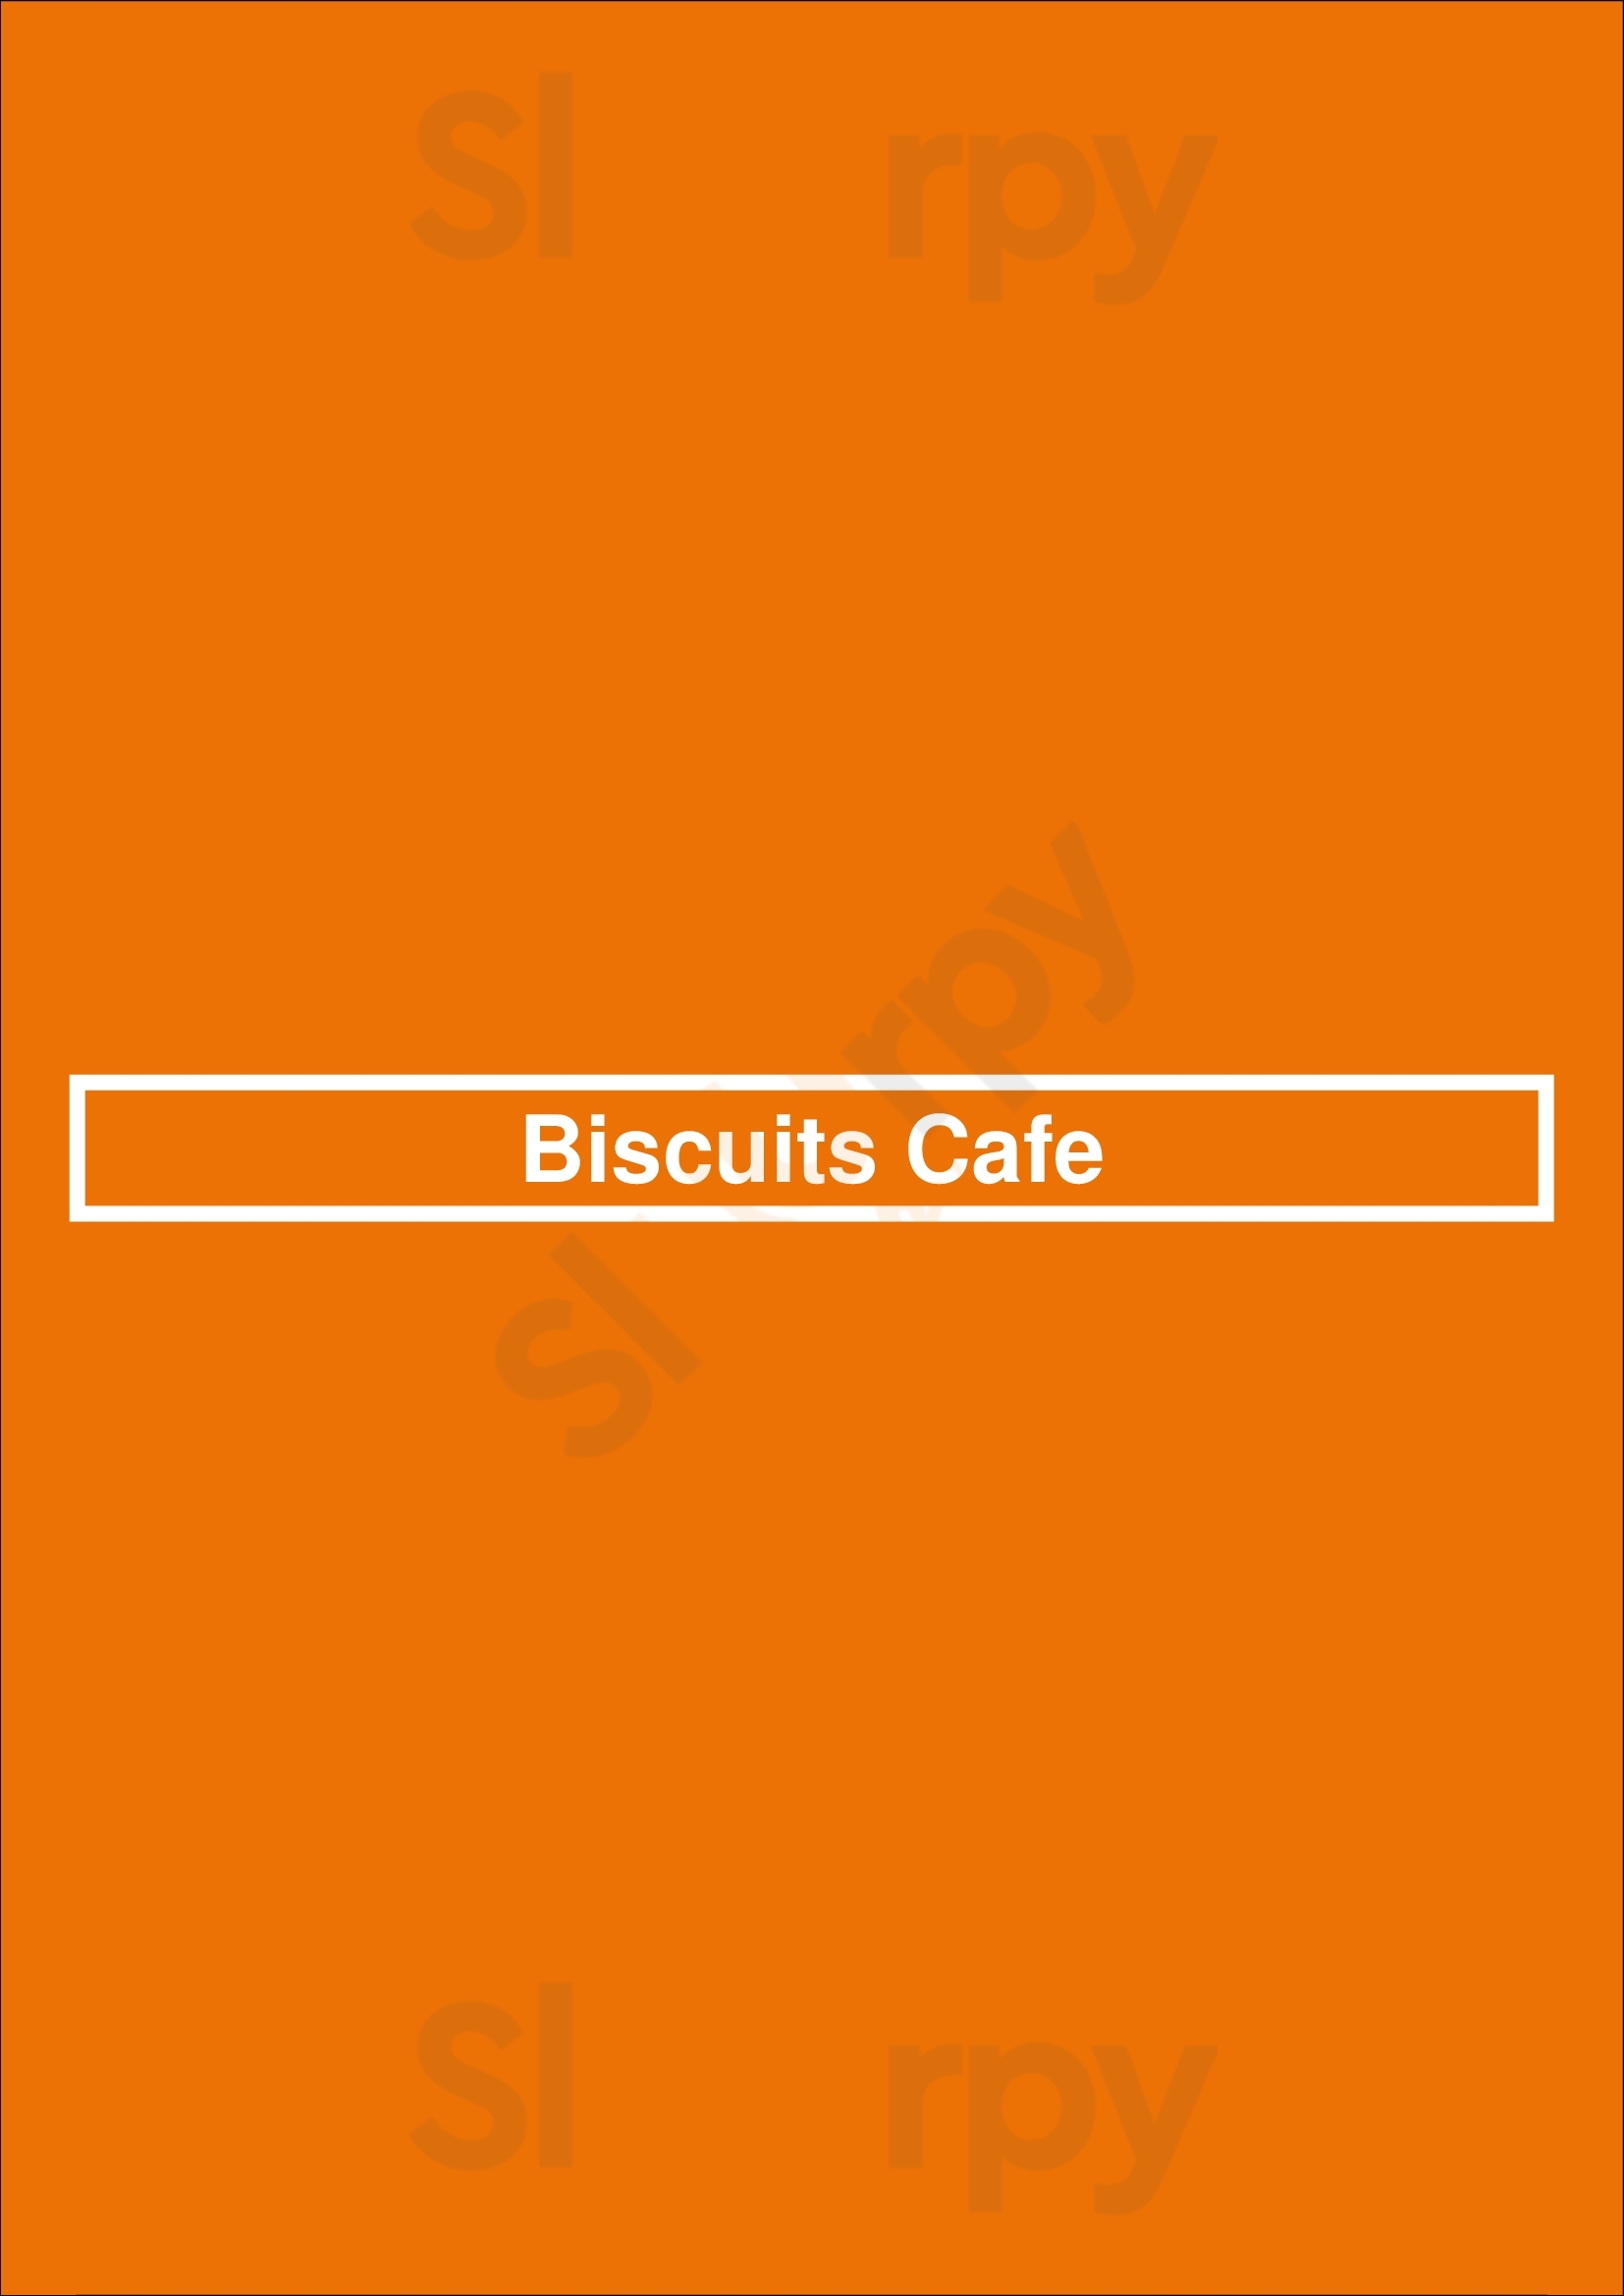 Biscuits Cafe Happy Valley Menu - 1